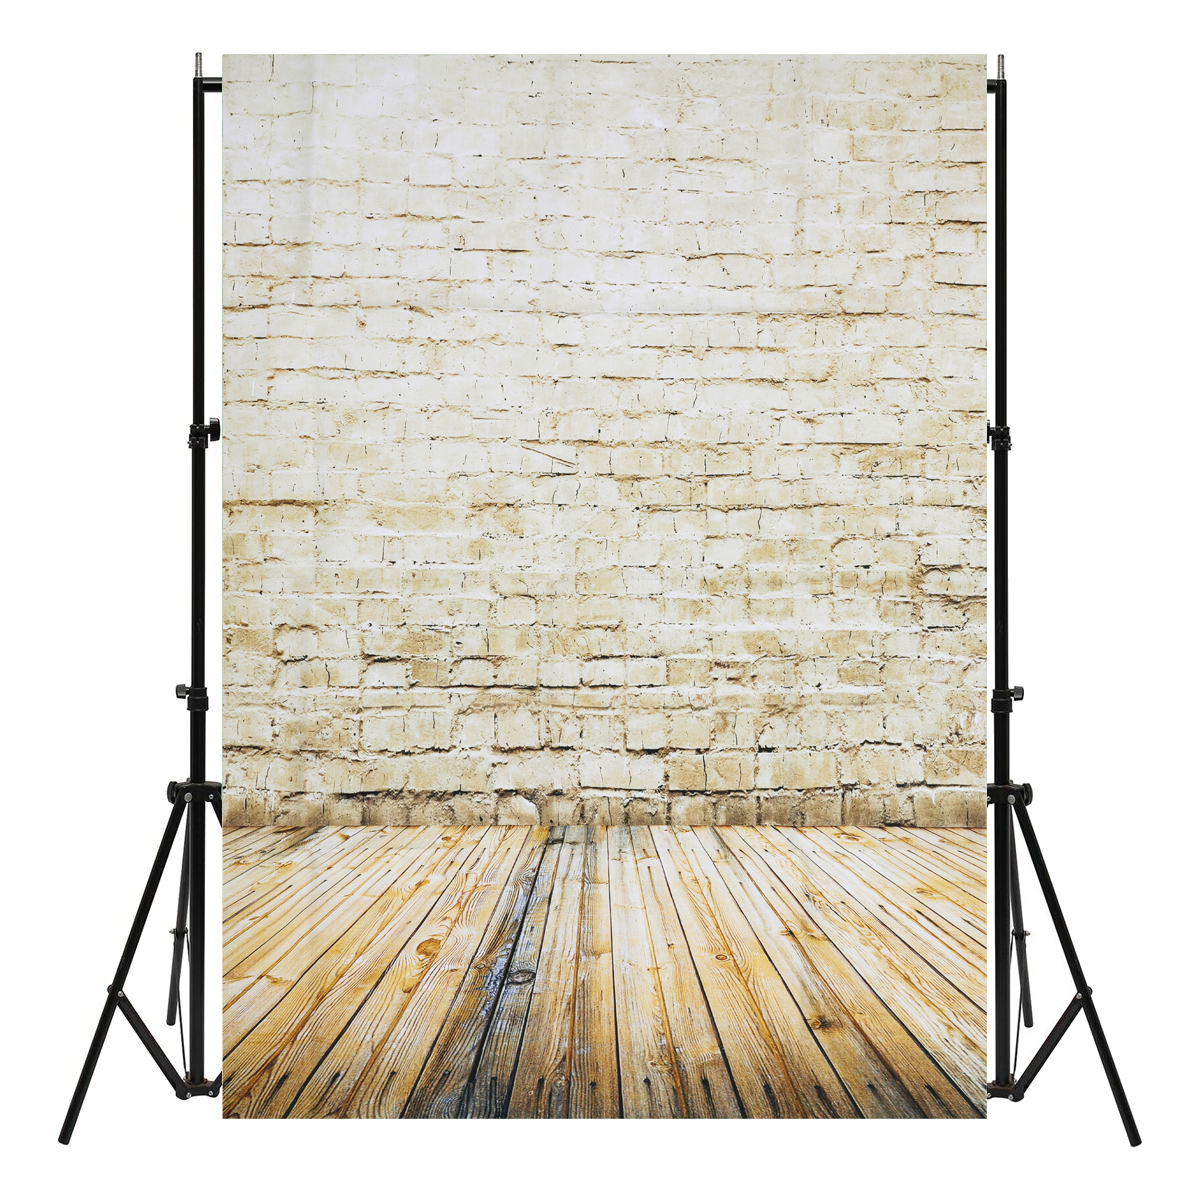 Mohoo-15x21m-Beige-Brick-Wall-Wooden-Floor-Studio-Props-Photography-Backdrop-Background-Silk-Materia-1958161-1